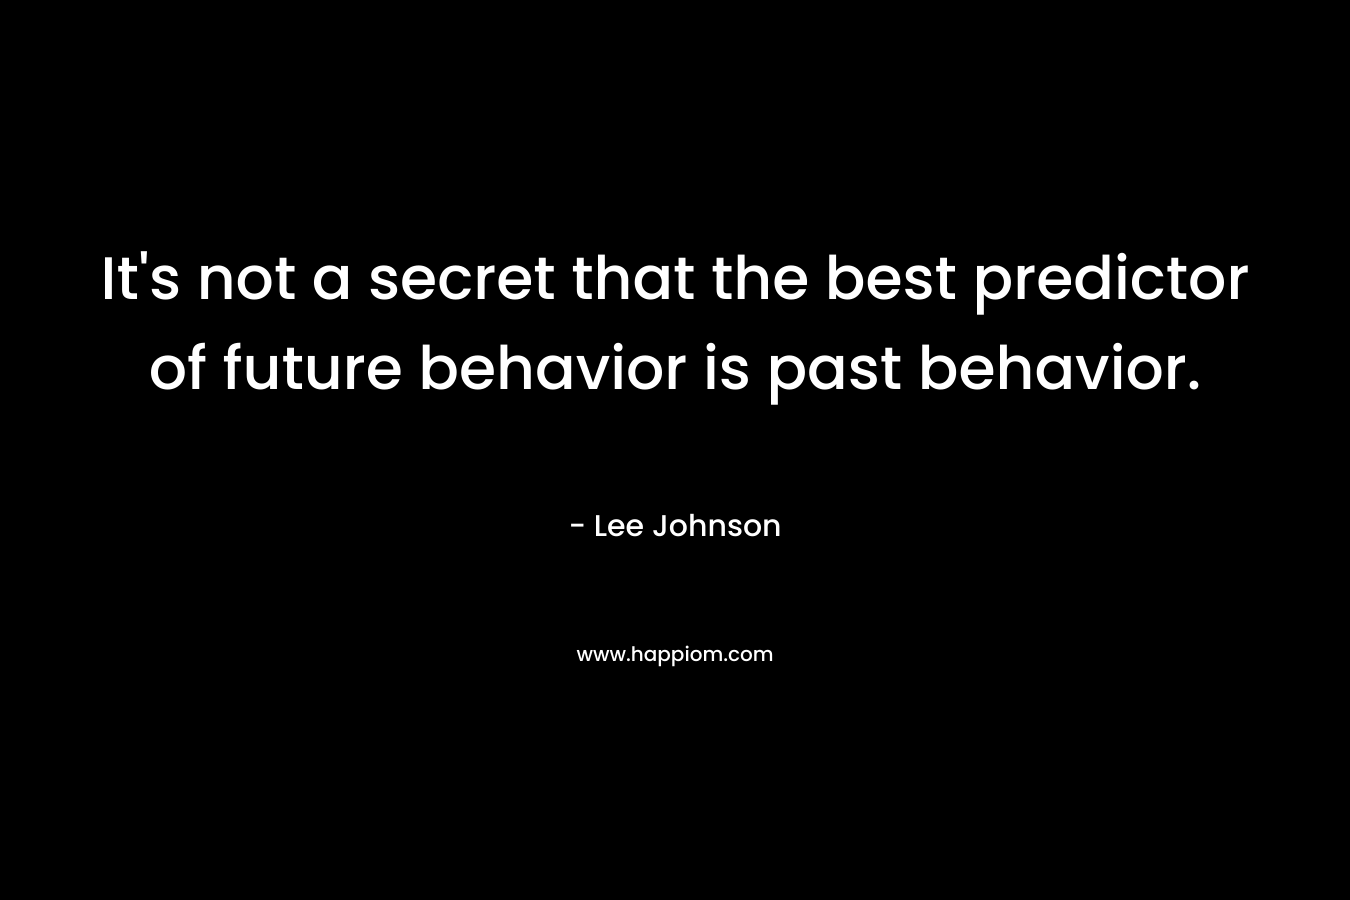 It's not a secret that the best predictor of future behavior is past behavior.